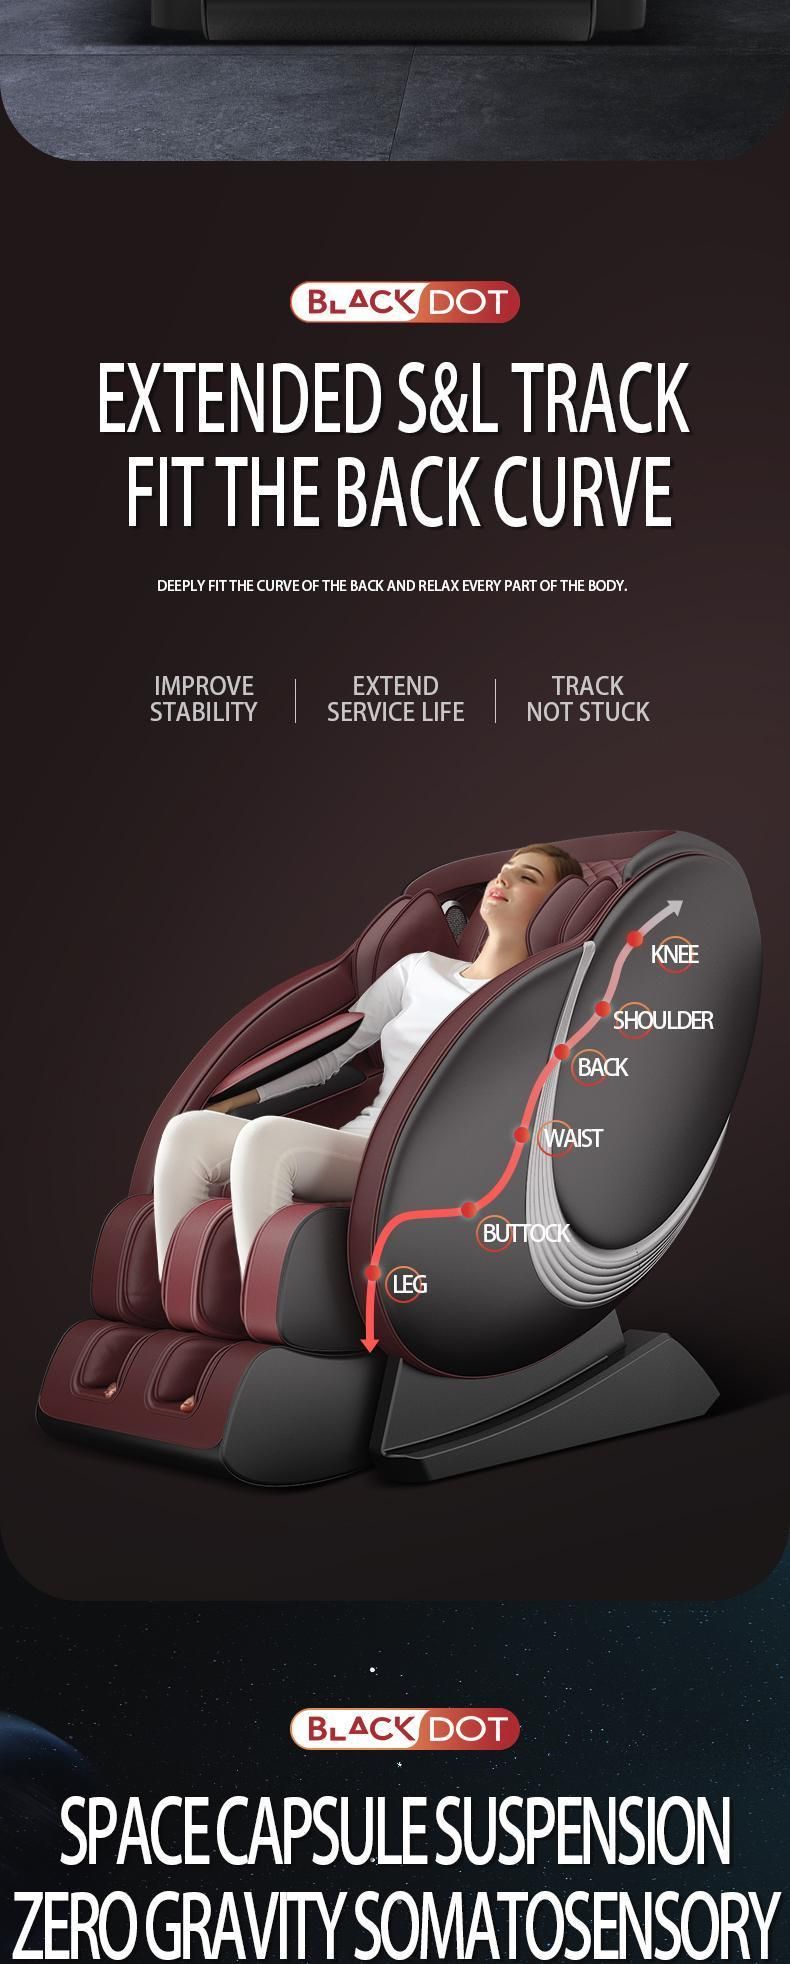 2022 Best Shiatsu Full Body Massage Chair Luxury Beauty Chair with Foot Massager